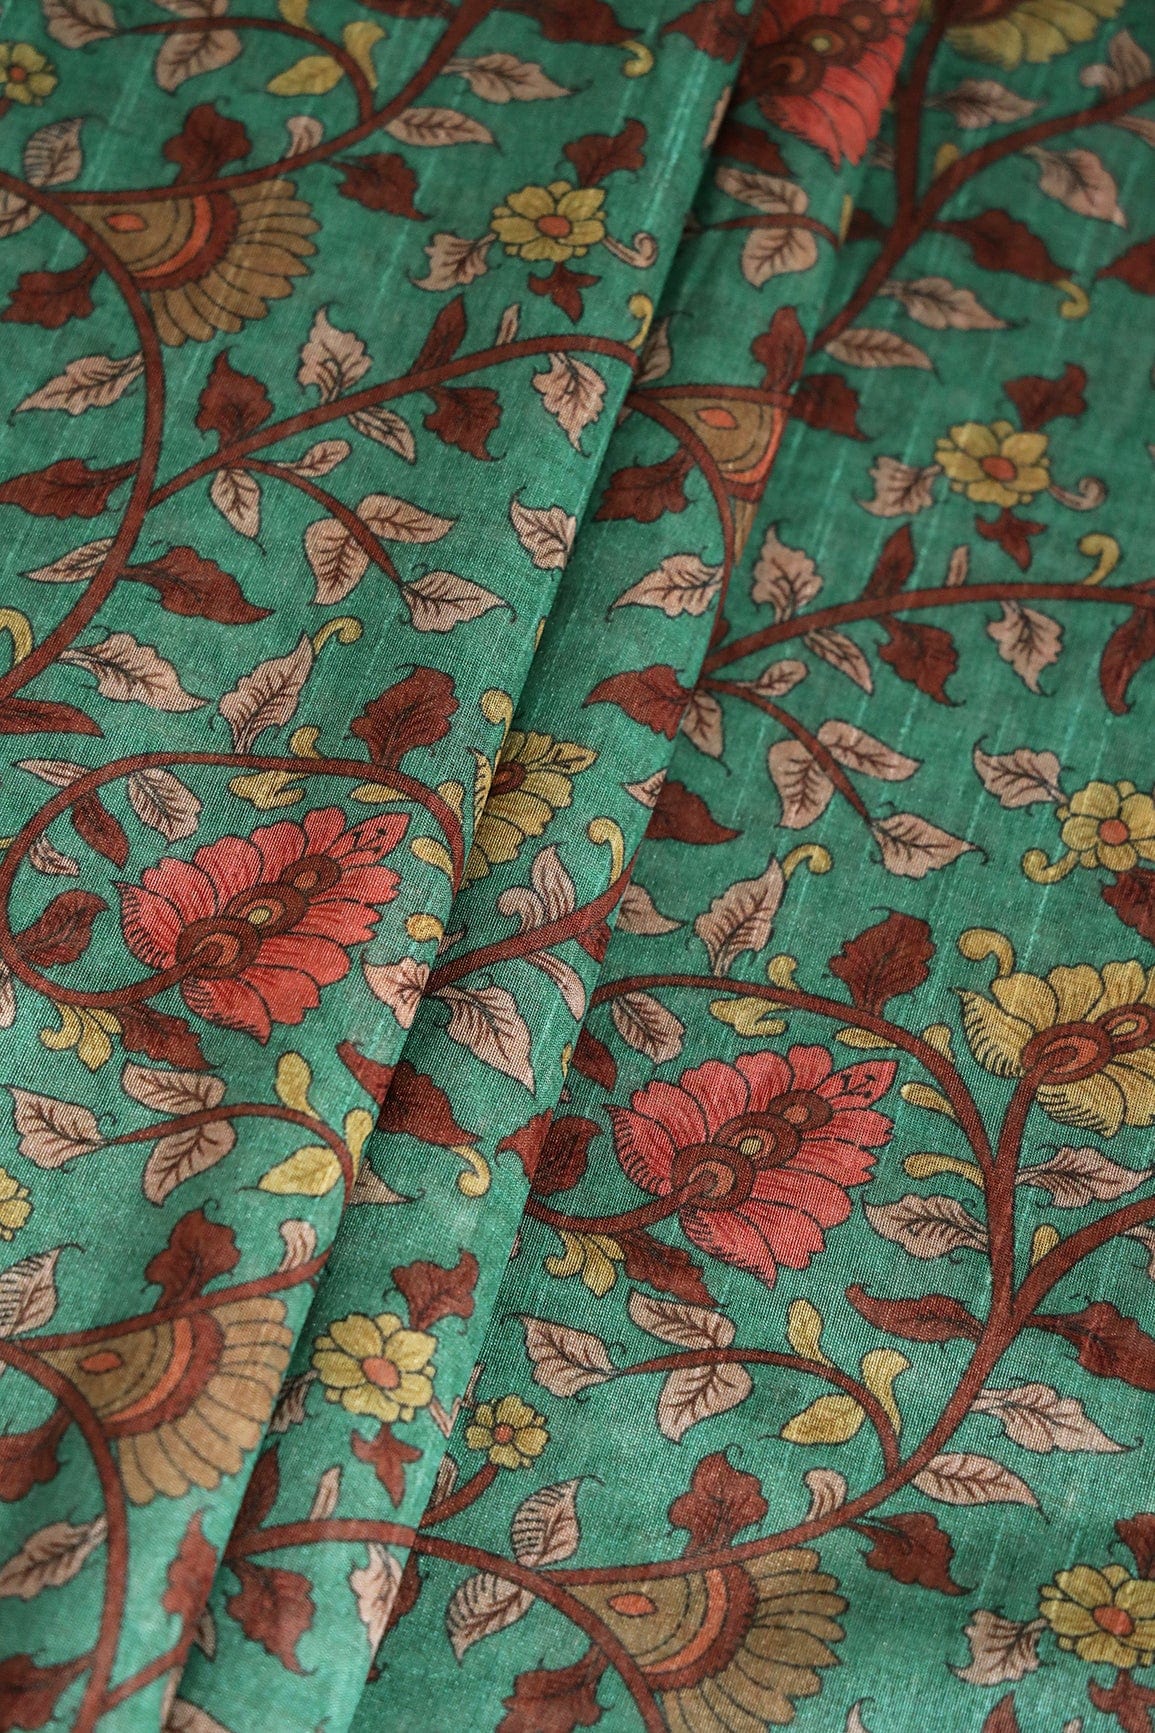 doeraa Prints Teal Floral Pattern Digital Print On Mulberry Silk Fabric